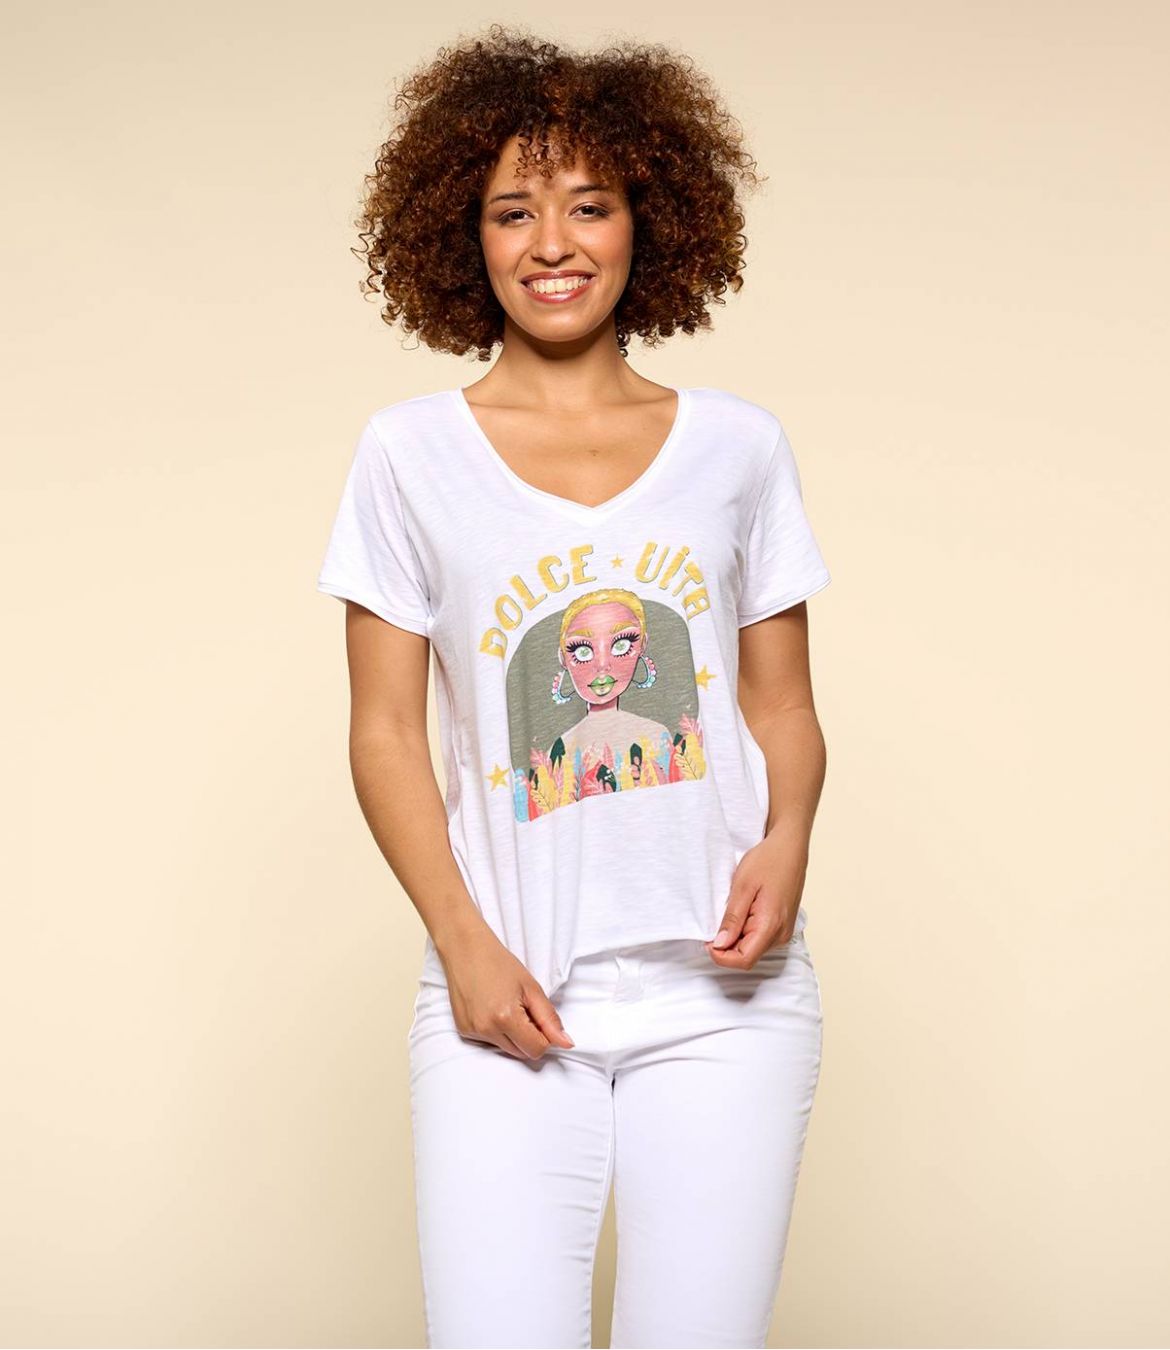 VITA BLANC M-I T-shirt en Coton bio pour Femme - 1